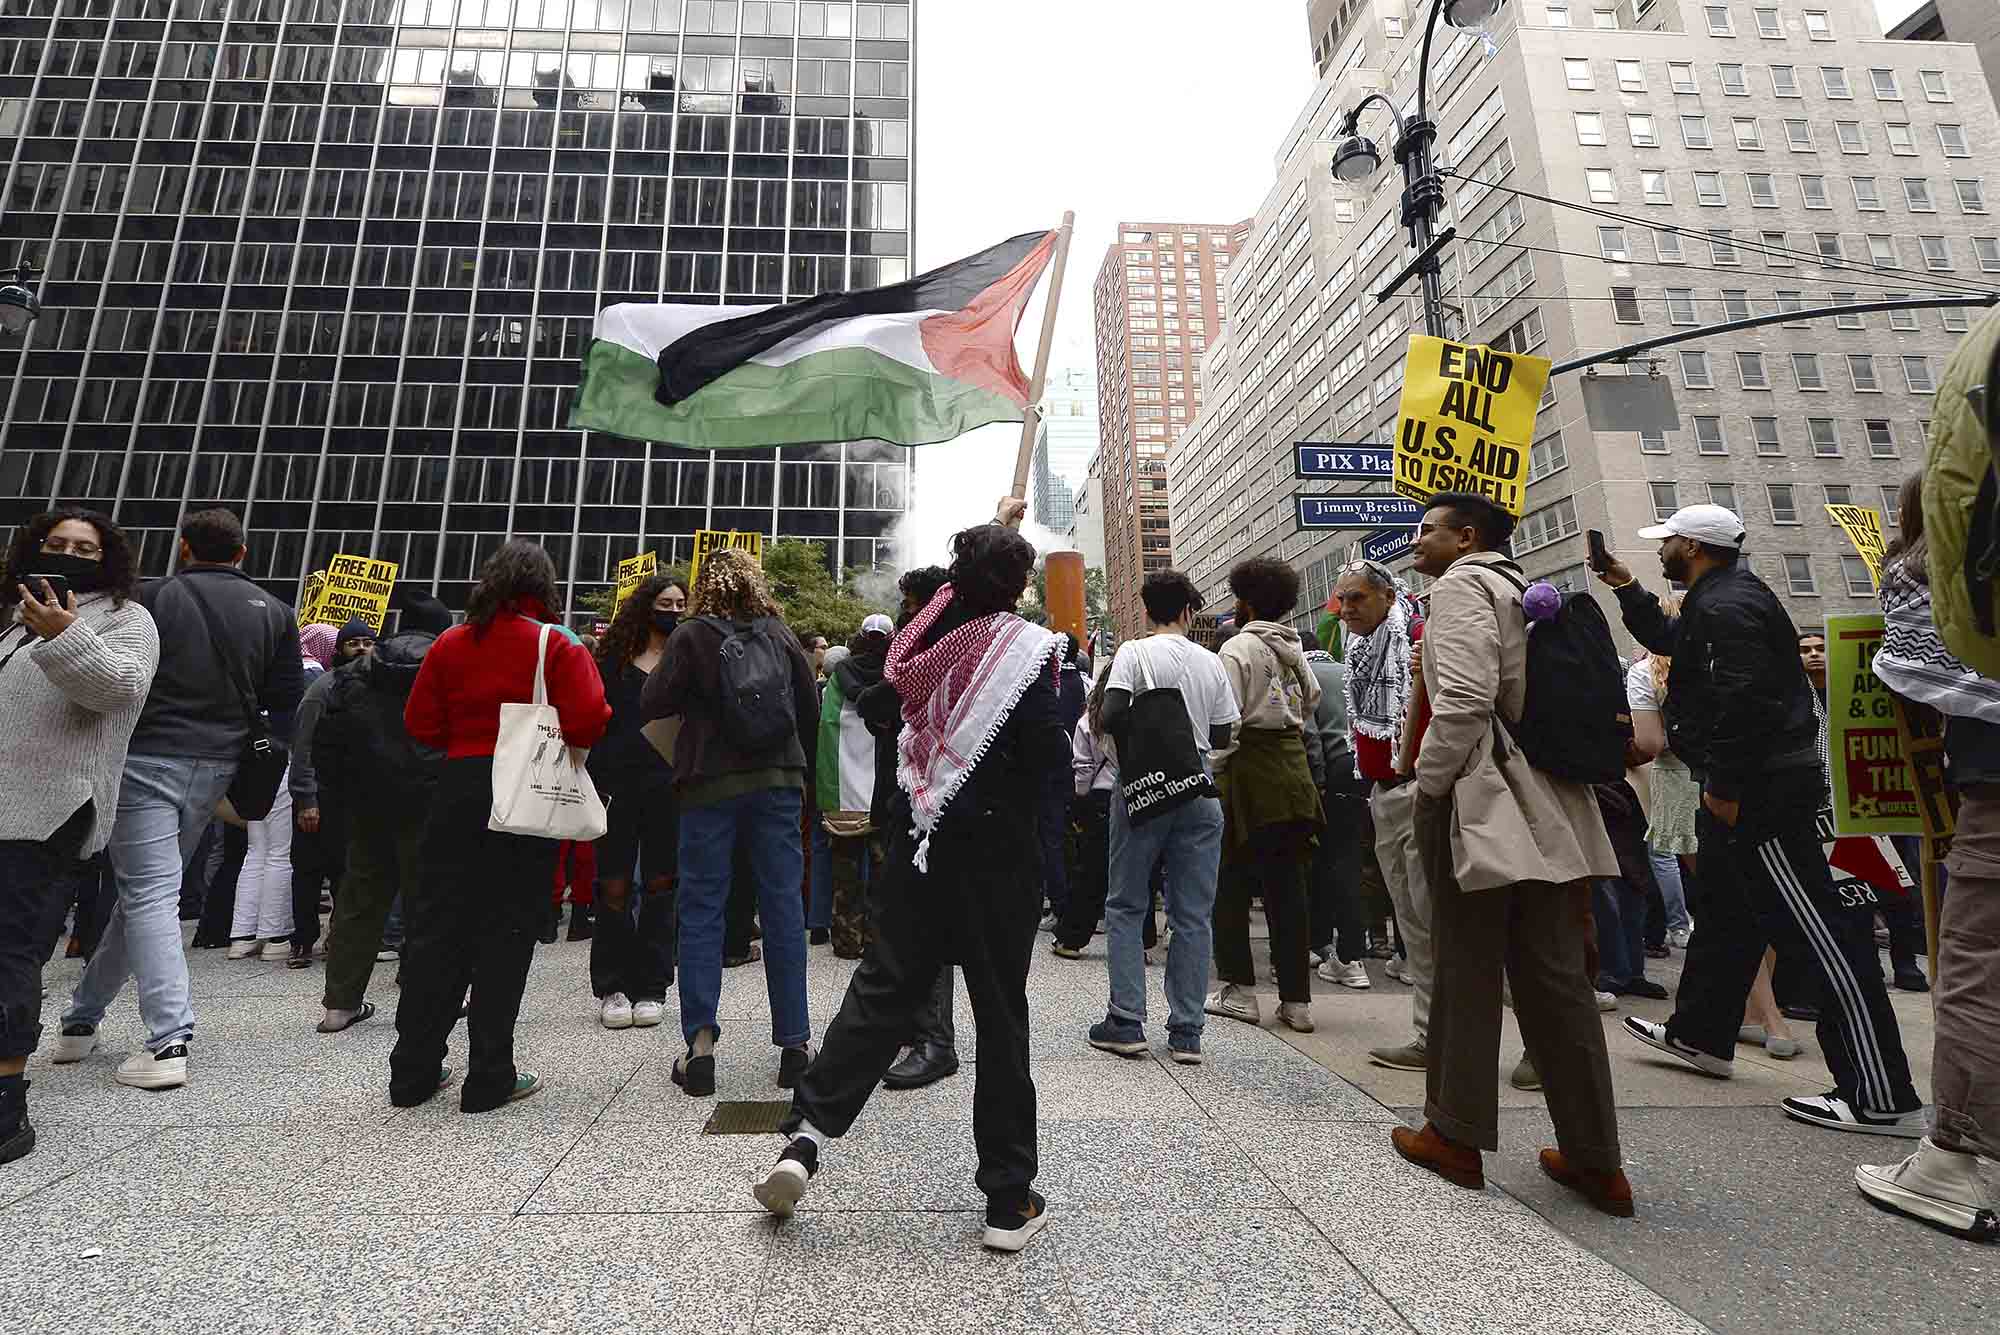 The Gaza war is widening rifts even in Latin America - The Boston Globe